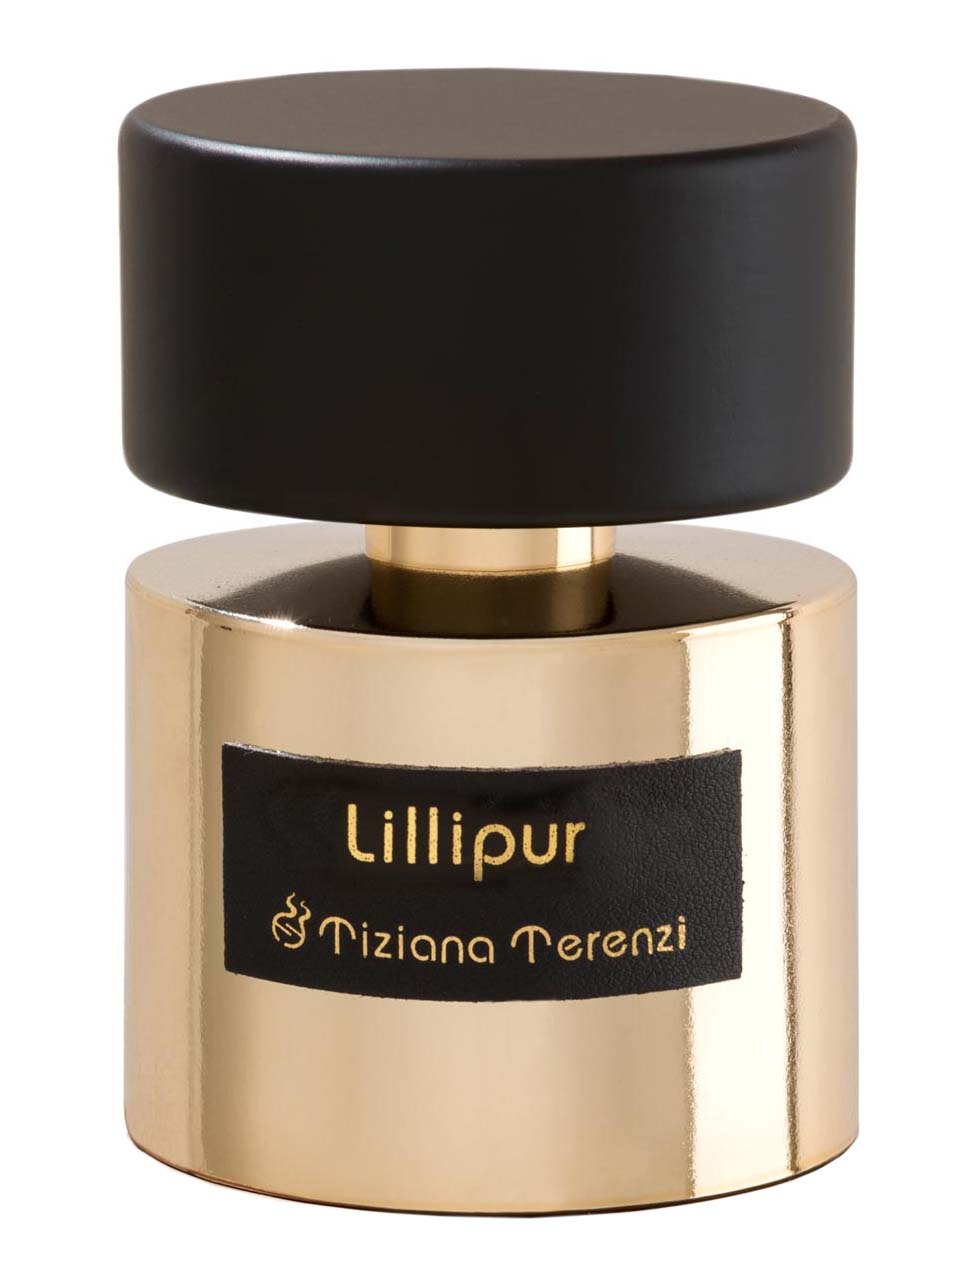 Lillipur Tiziana Terenzi perfume - a fragrance for women and men 2013